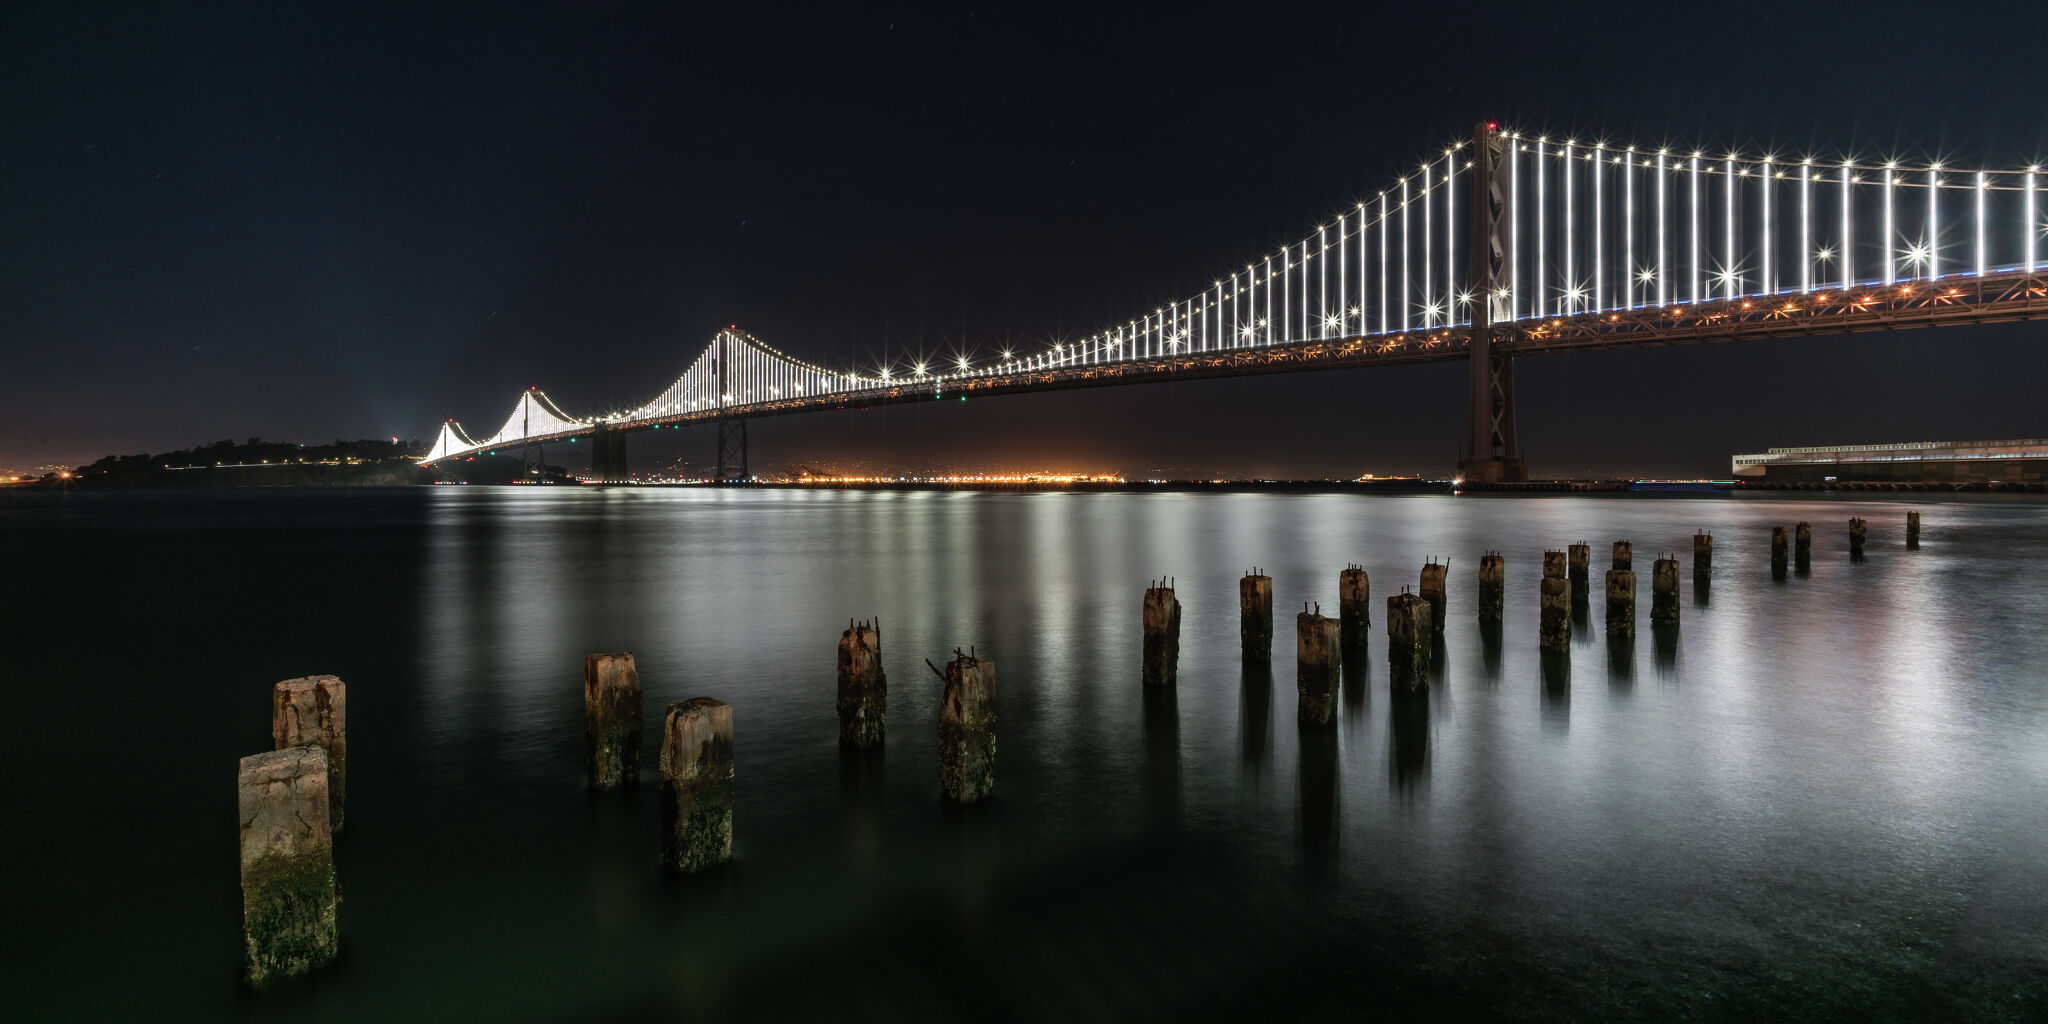 Light installation on San Francisco’s Bay Bridge shuts off